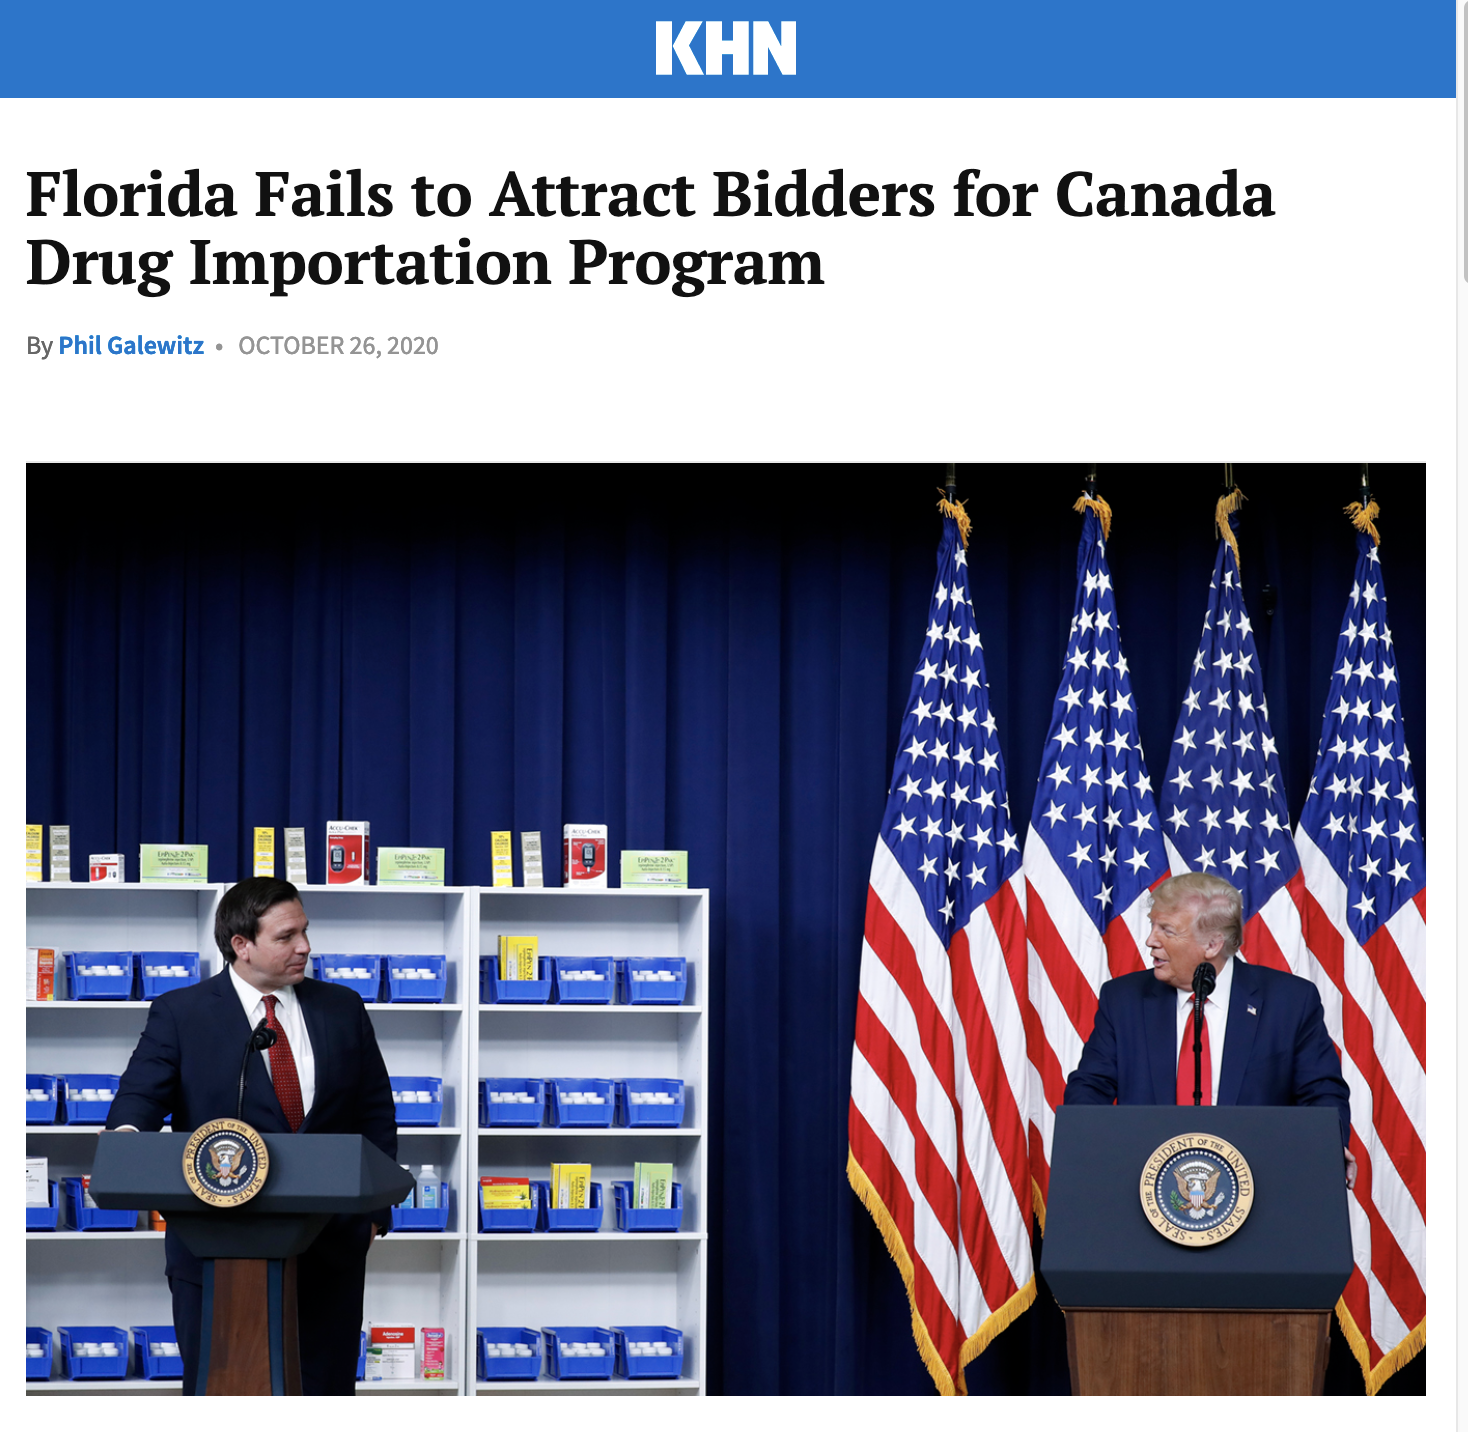 Headline: Florida Fails to Attract Bidders for Canada Drug Importation Program